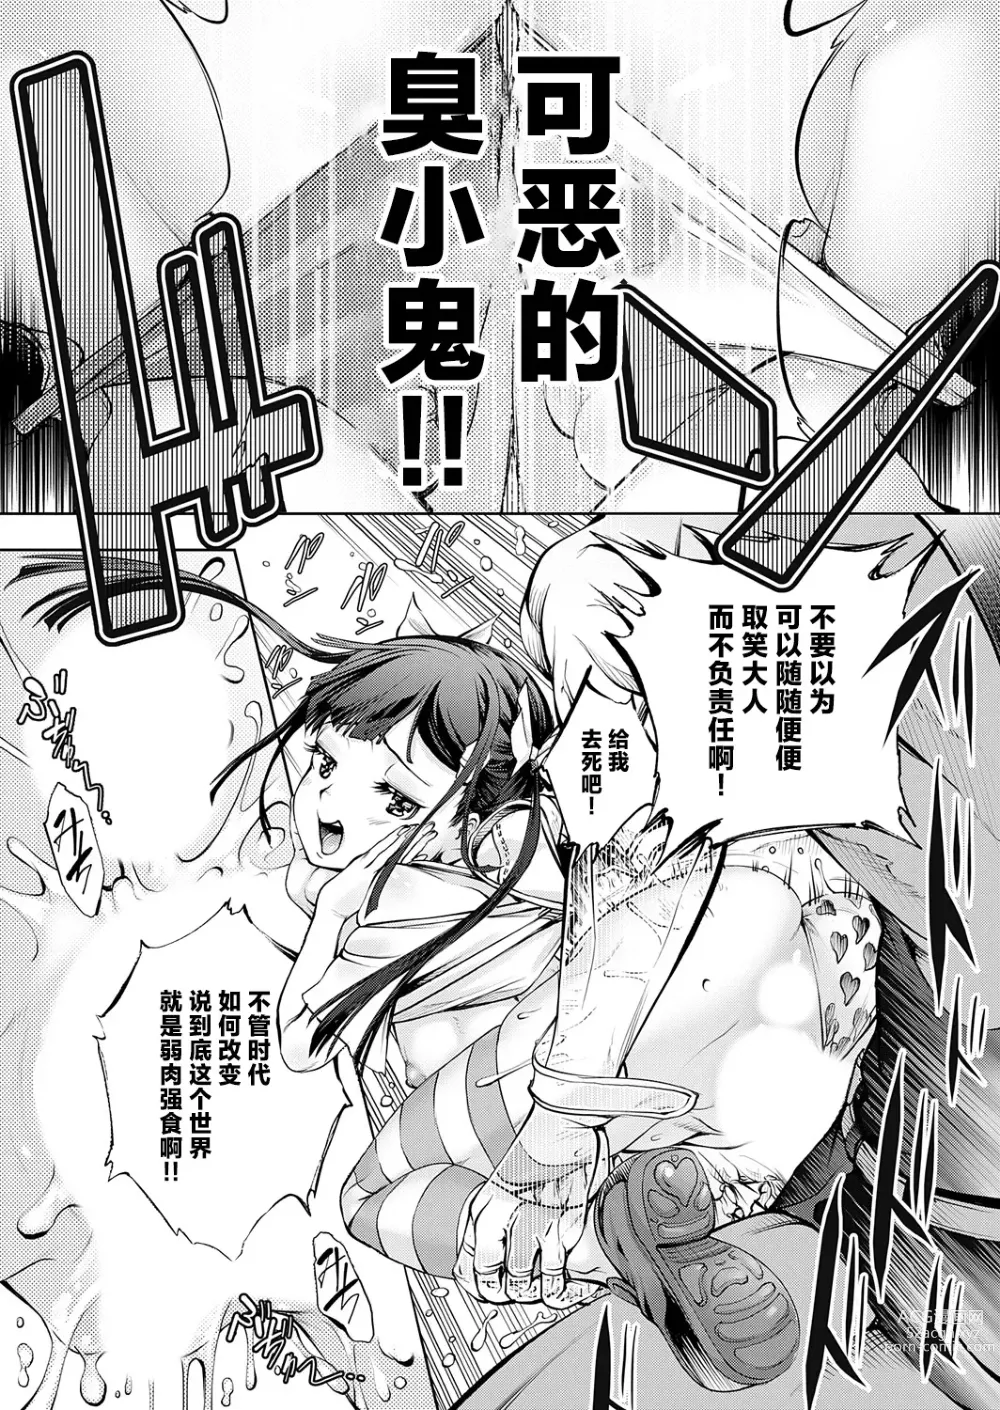 Page 15 of manga The Time ~Ore Monogatari~